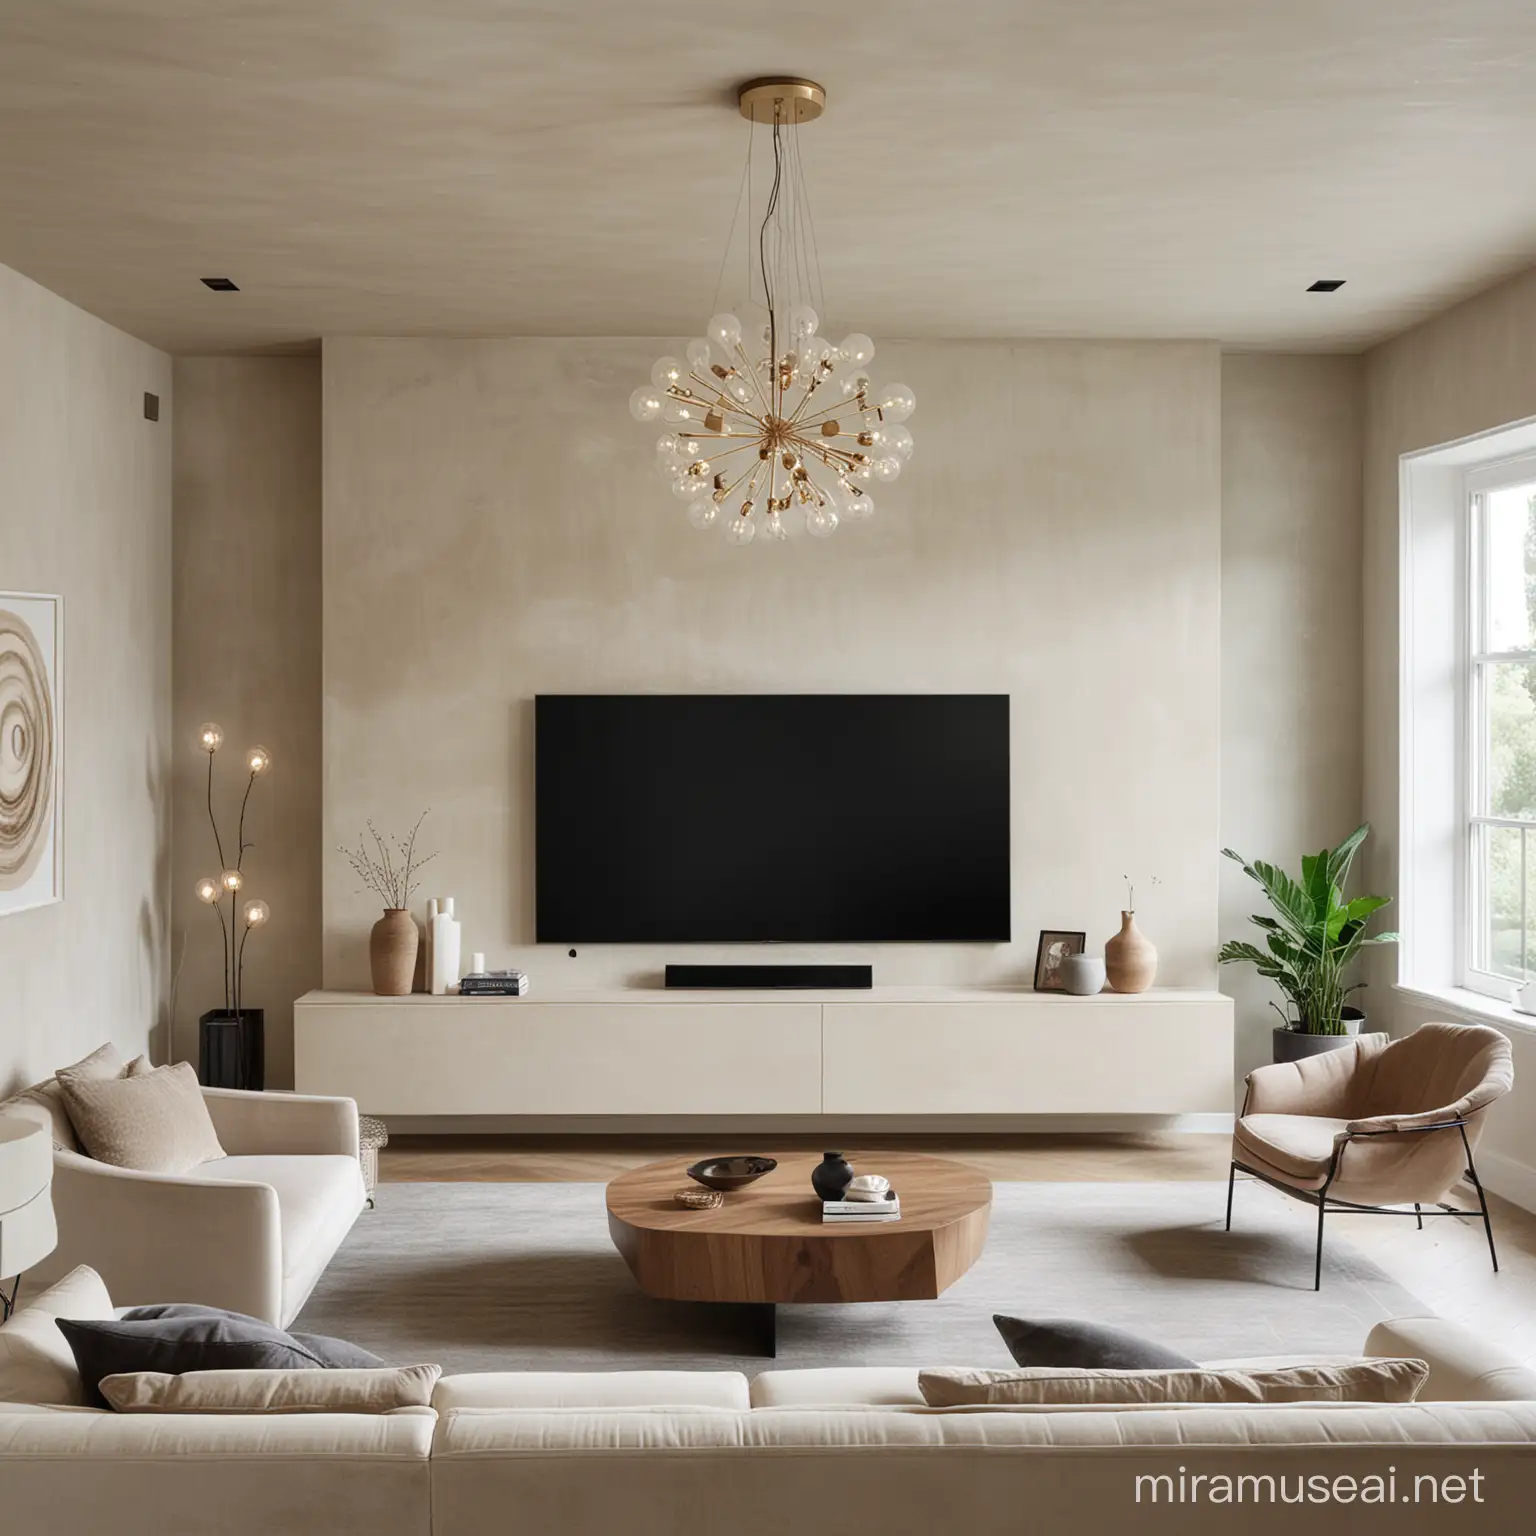 Elegant Minimalist Living Room with Limewash Walls and EyeCatching Light Fixture